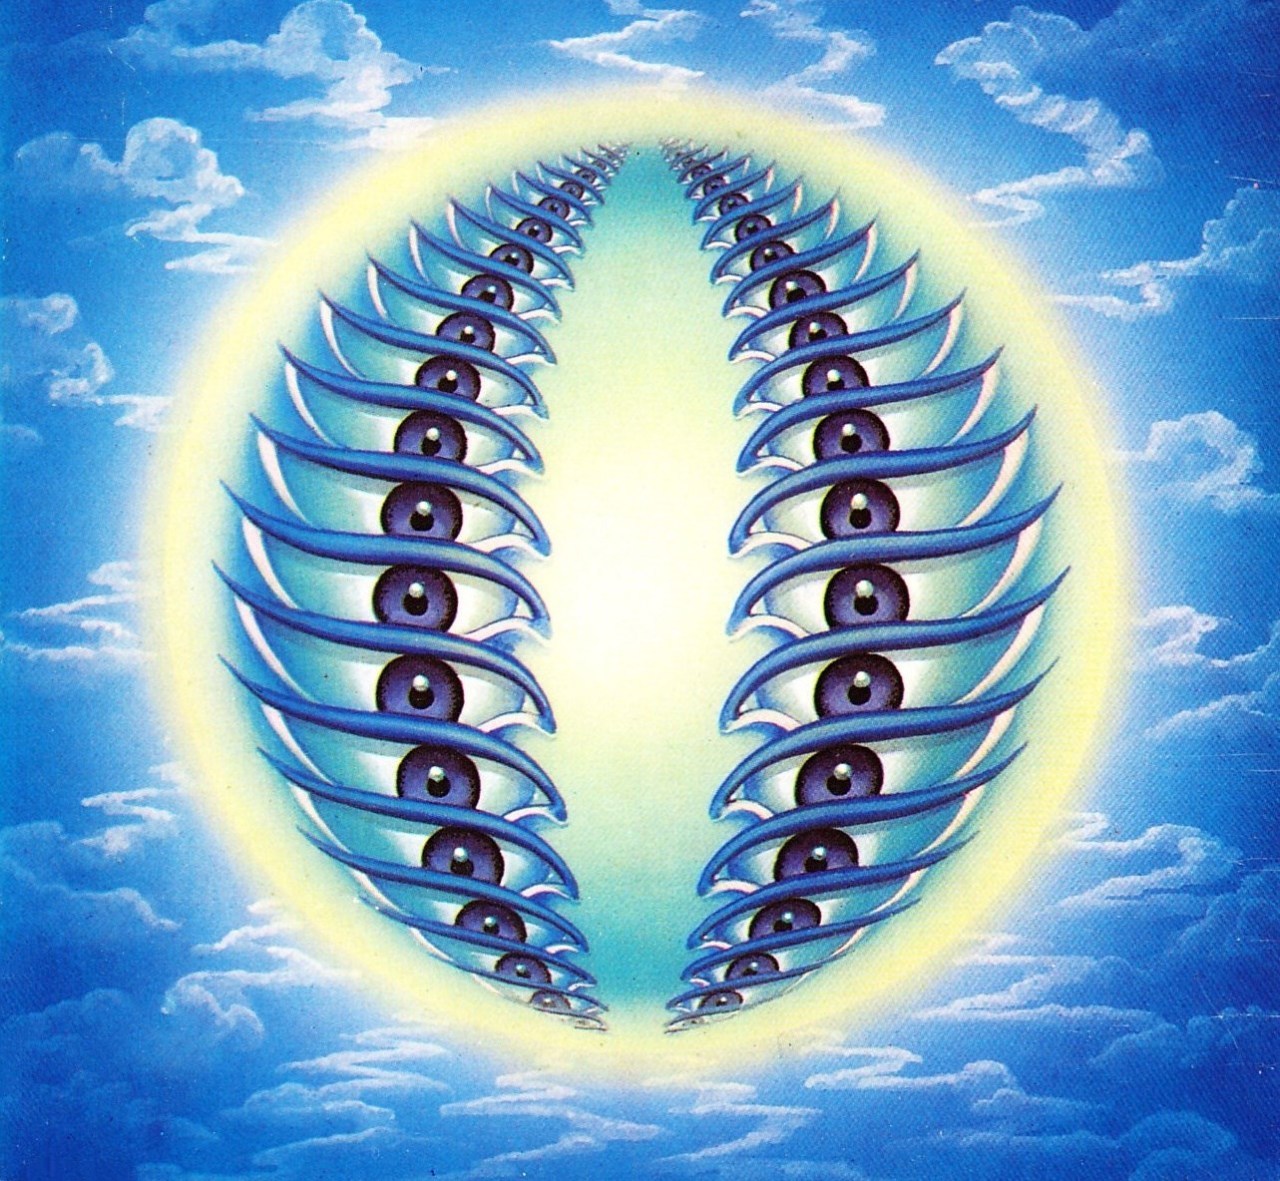 talonabraxas:
“ Eyes of the Overworld, 1972.
”